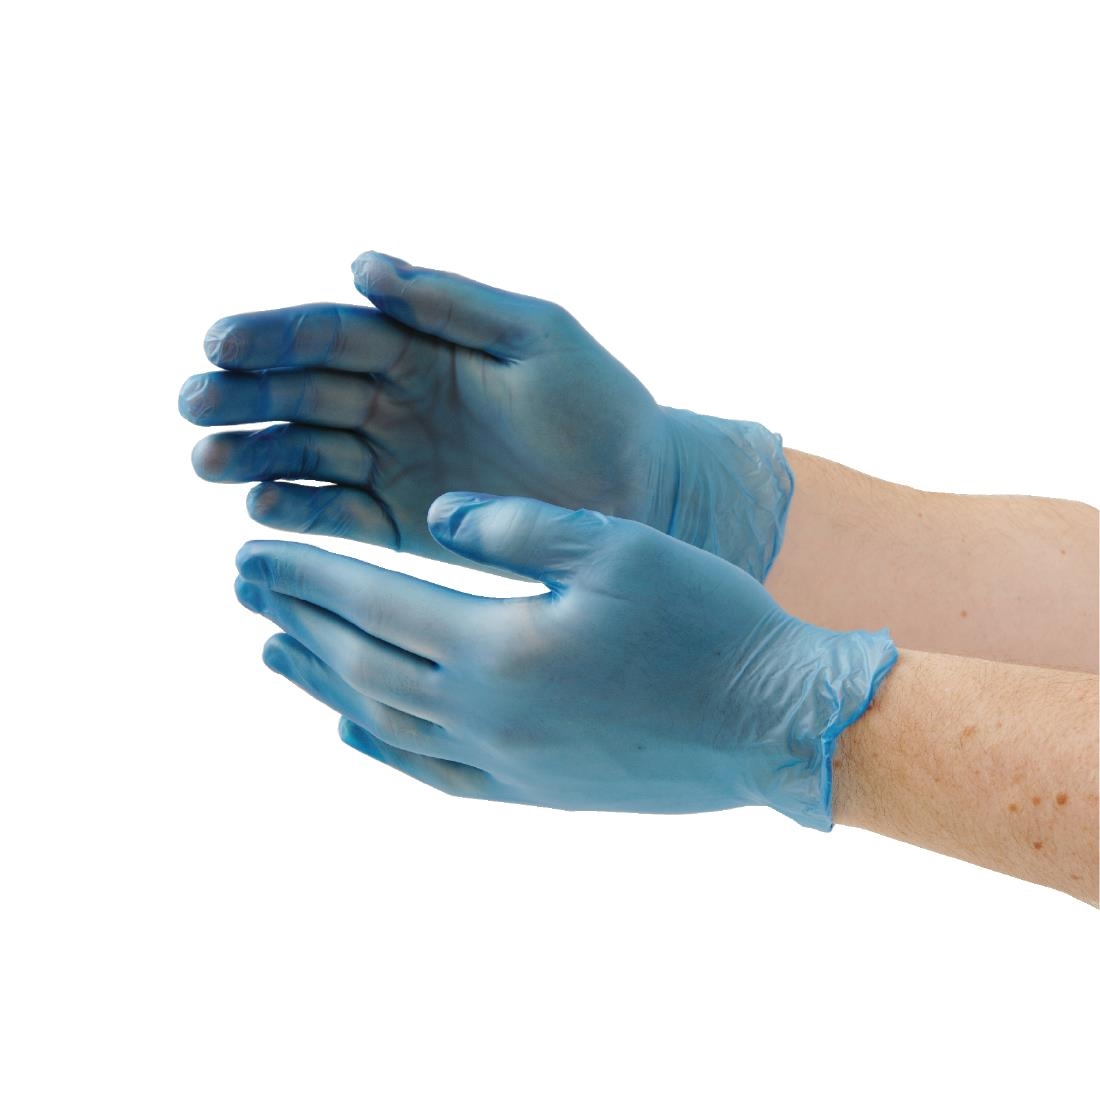 Vogue Powder-Free Vinyl Gloves Blue Large (Pack of 100)